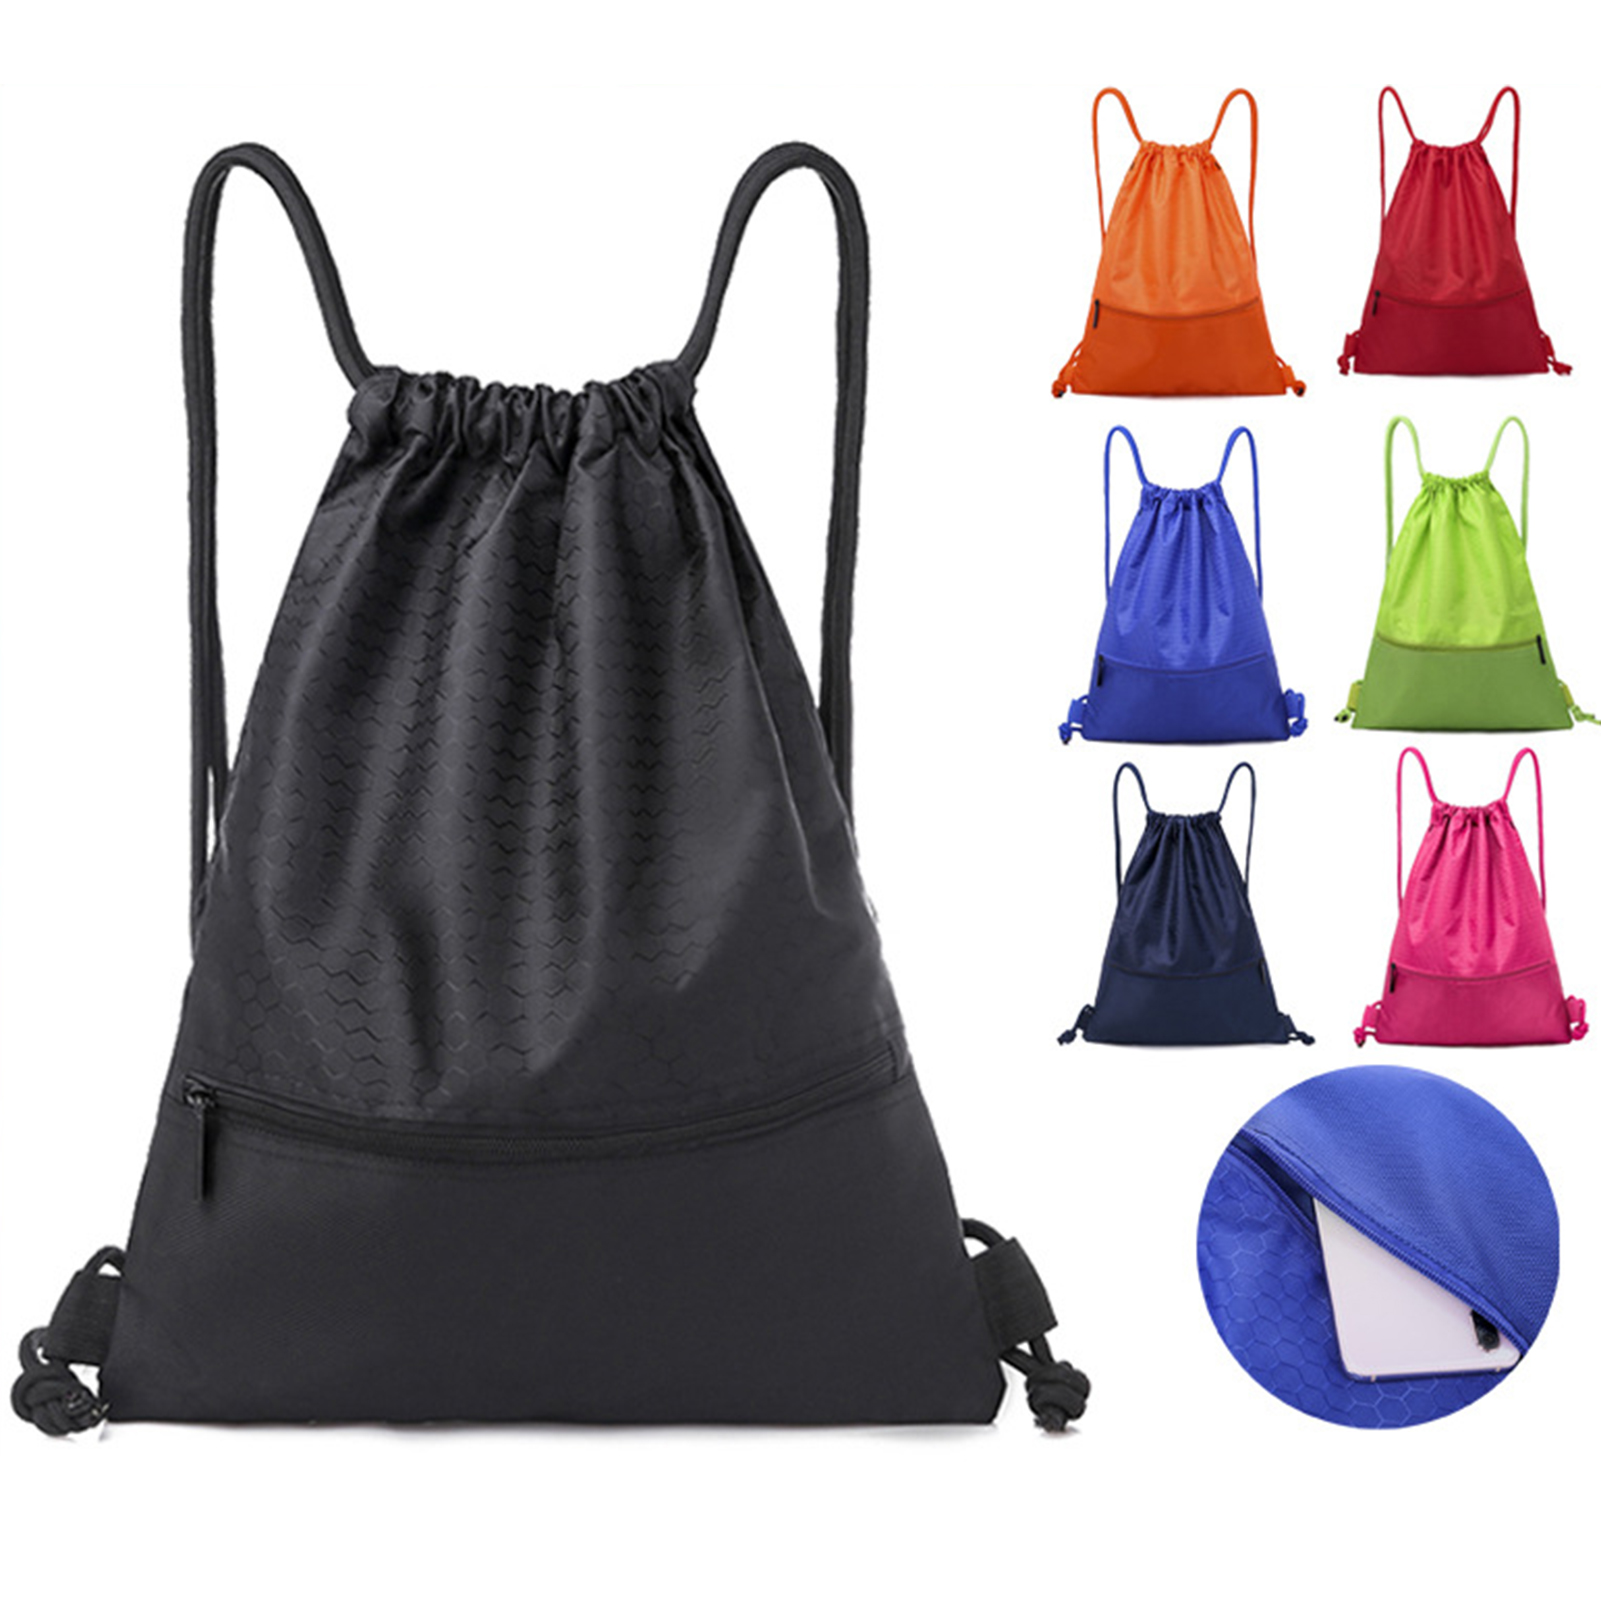 Yesbay Nylon Waterproof Zipper Drawstring Backpack Outdoor Sport Fitness Storage Bag,Red - image 3 of 7